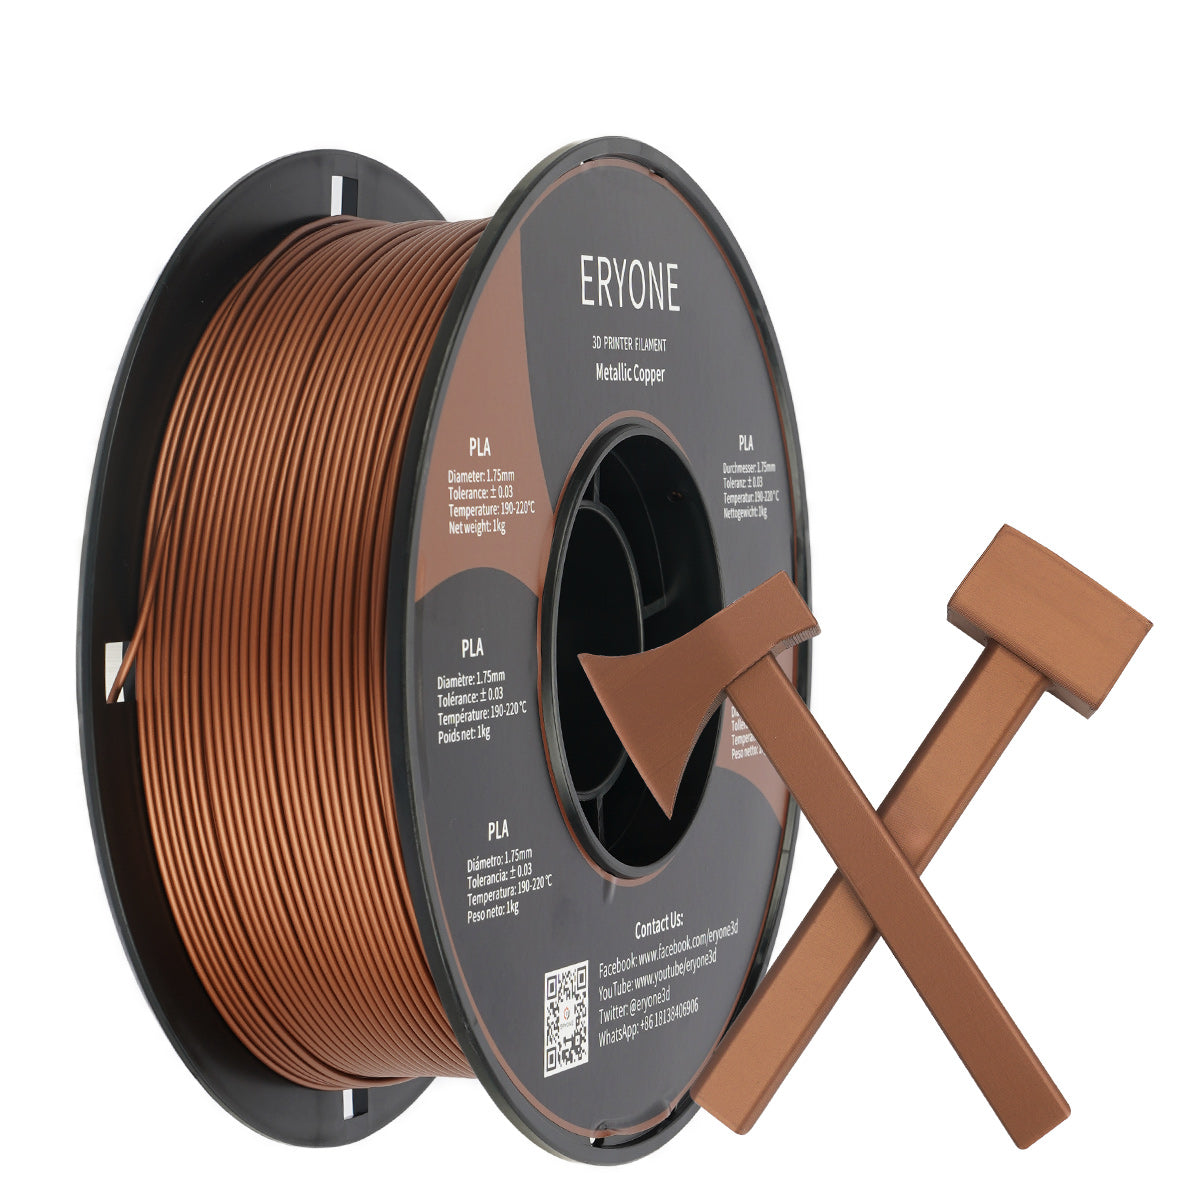 Pre-sale ERYONE Metallic PLA Filament 1.75mm, 3D Printer Filament Metal PLA, +/-0.03mm, 1kg(2.2lbs)/Spool, Stainless Steel